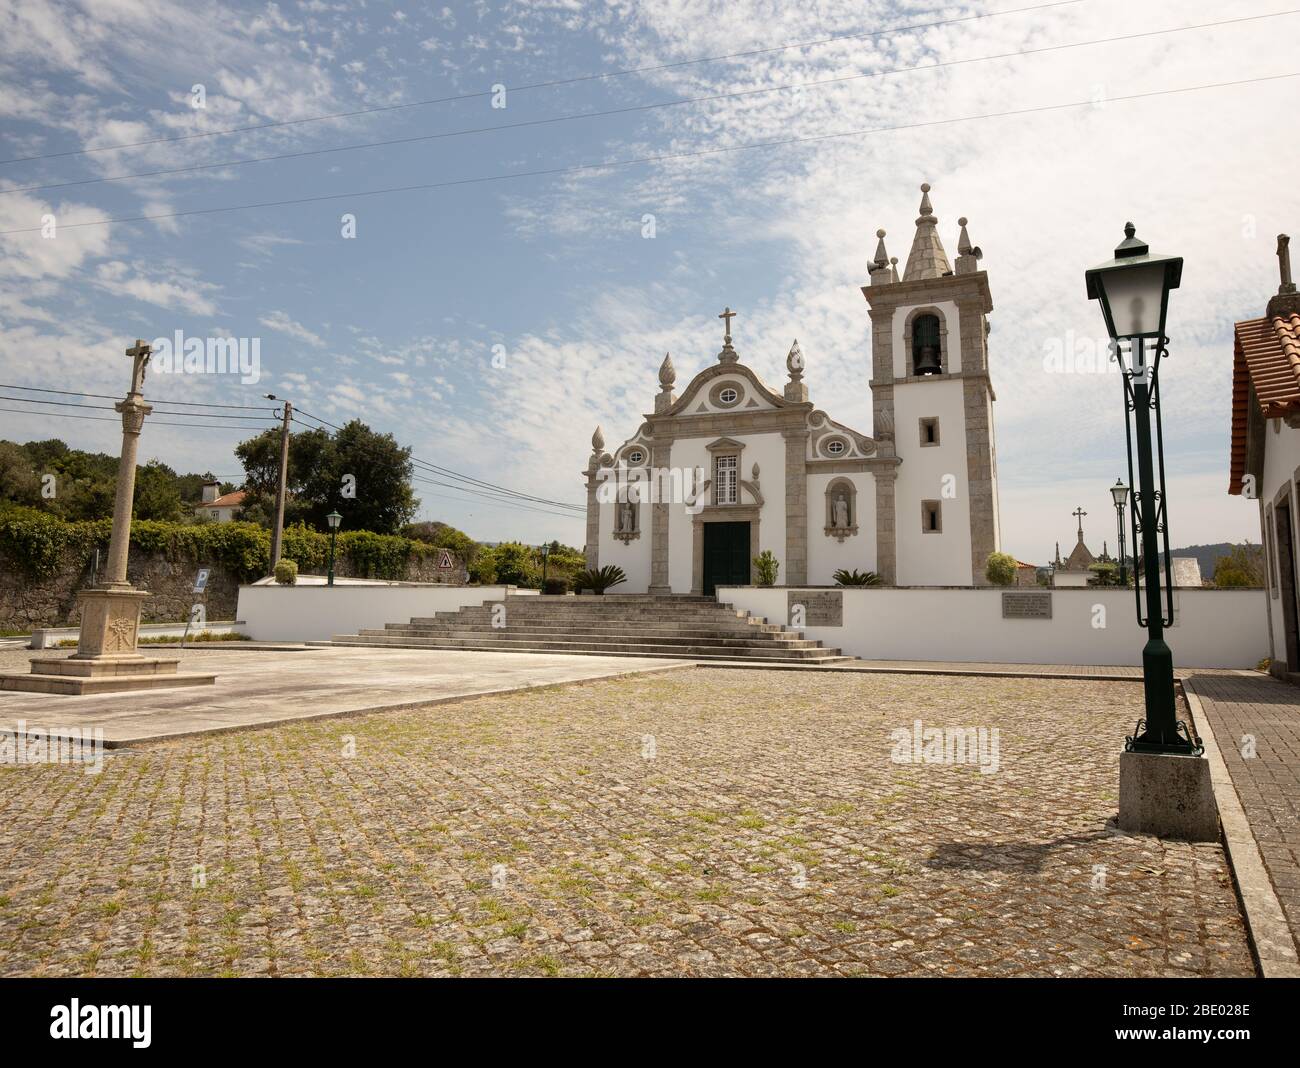 Weiße Grand Stein Freixieiro de Soutelo katholische Kirche in der Nähe von Viana do Castelo, Portugal. Stockfoto